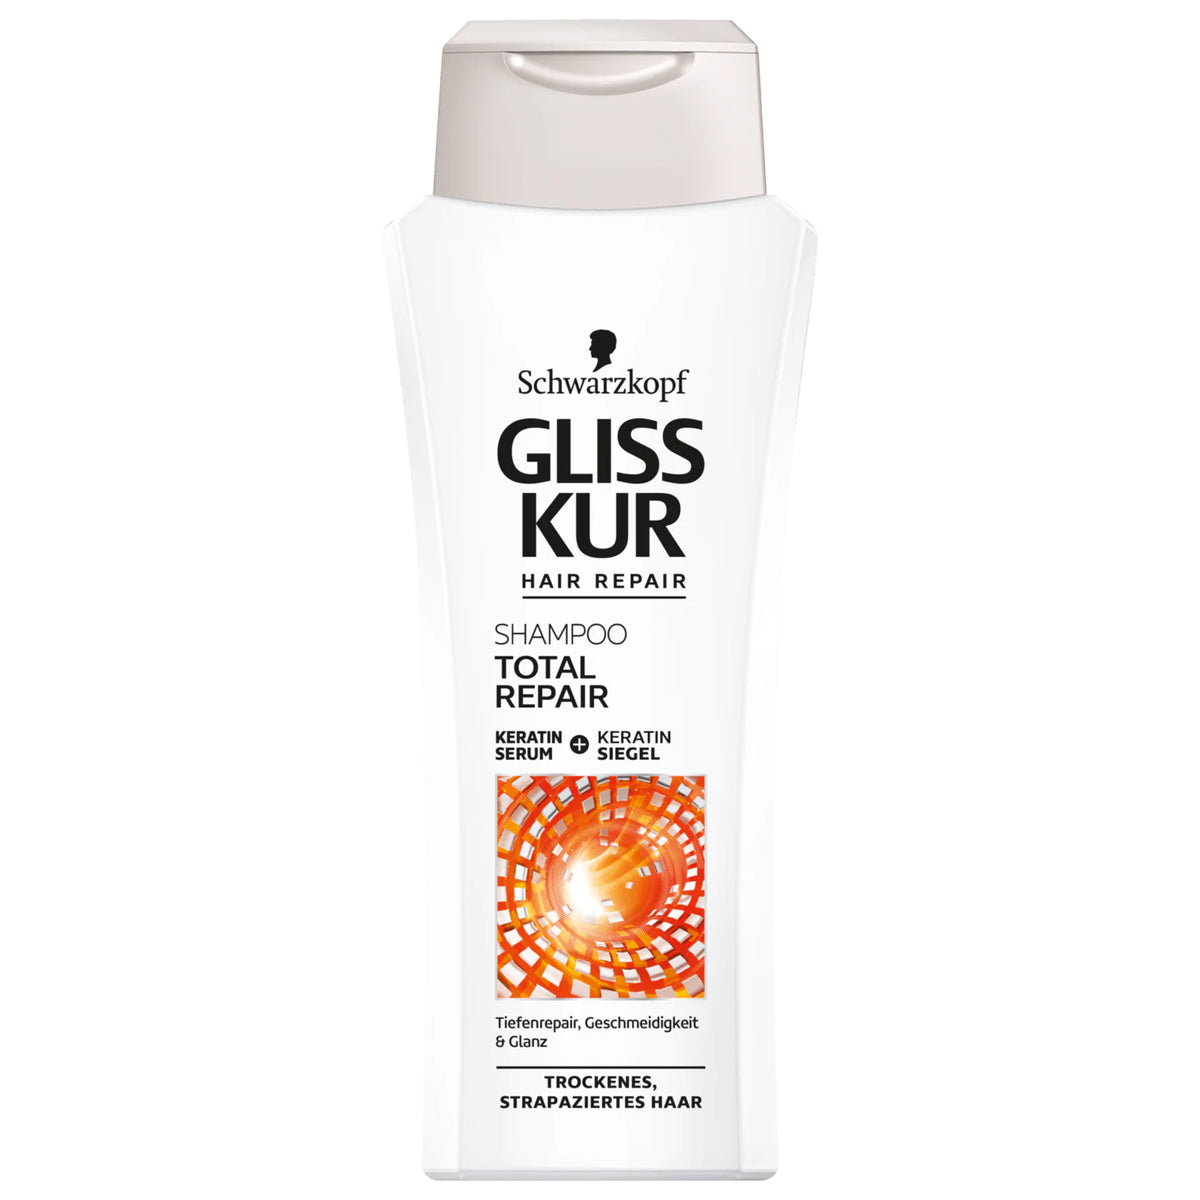 Schwarzkopf Gliss Kur Shampoo Total Repair 250ml